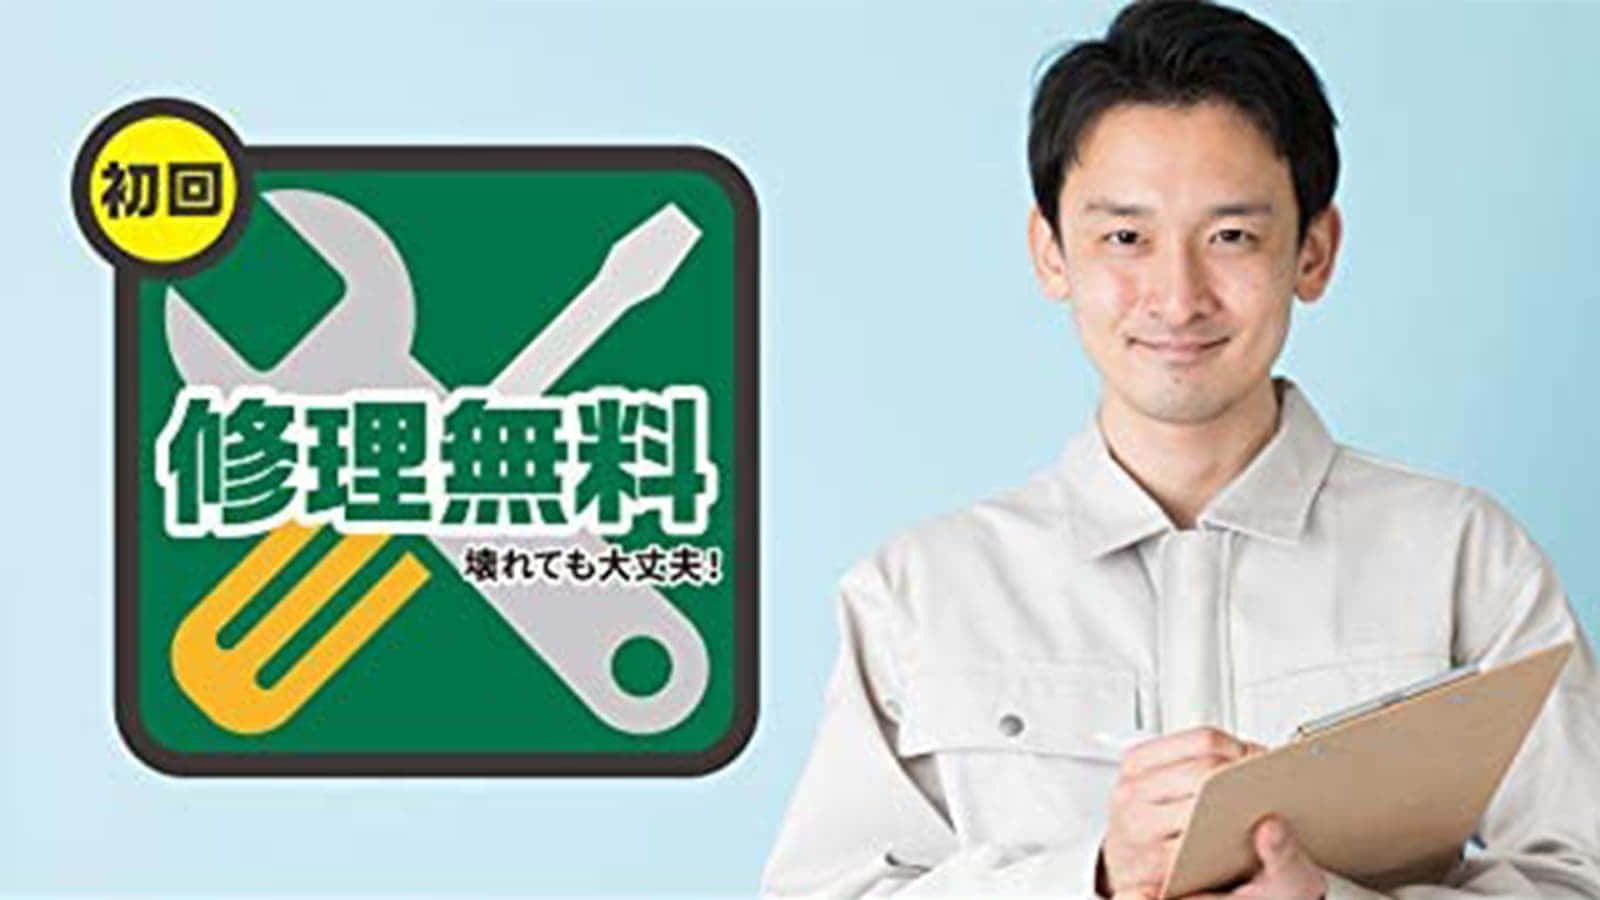 HiKOKI 初回修理保証付き電動工具を展開【Amazon限定】